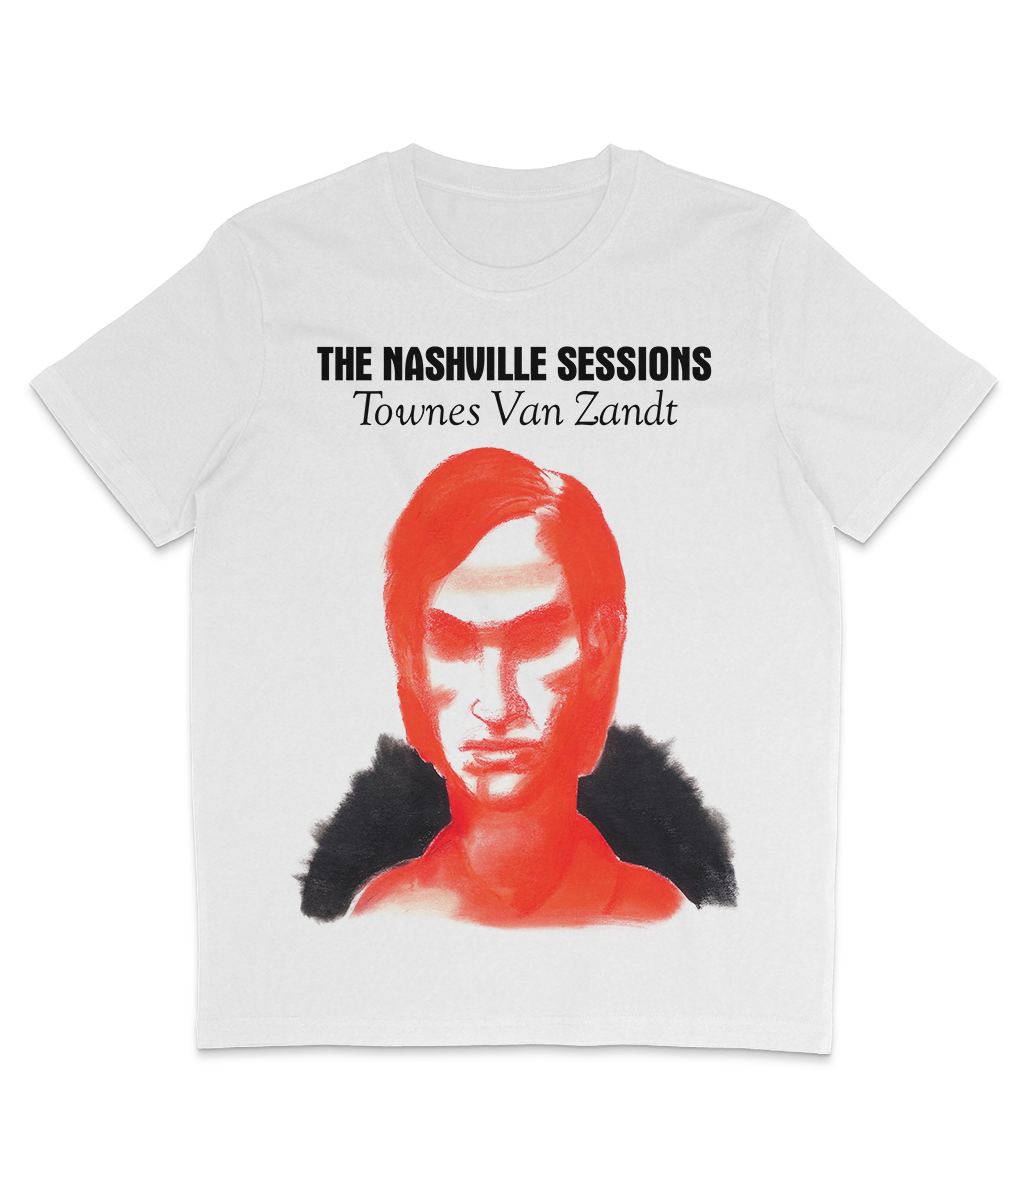 Townes Van Zandt - The Nashville Sessions - 1993